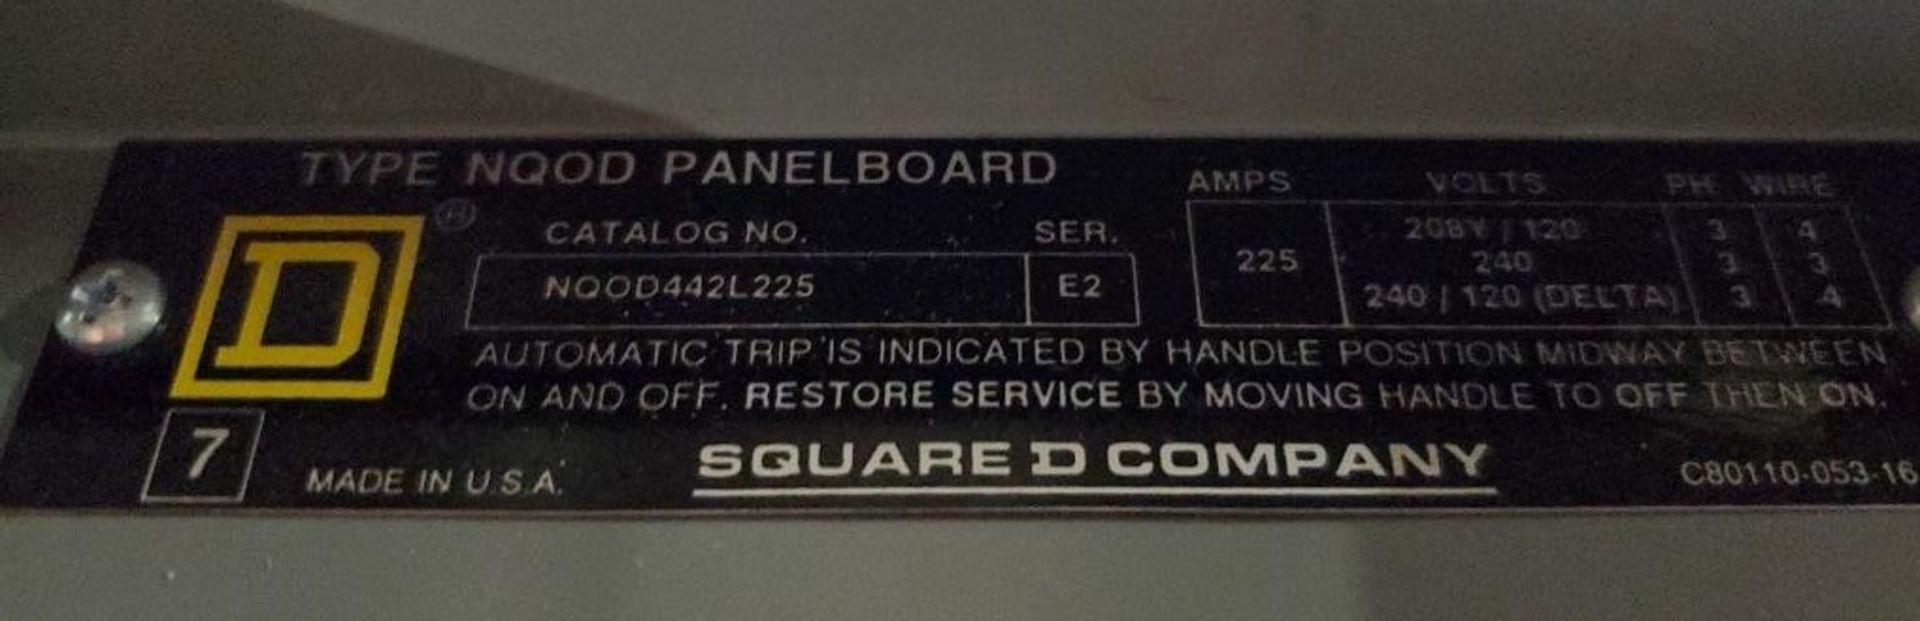 (2) Square D Lockable Breaker Panels - Image 4 of 8